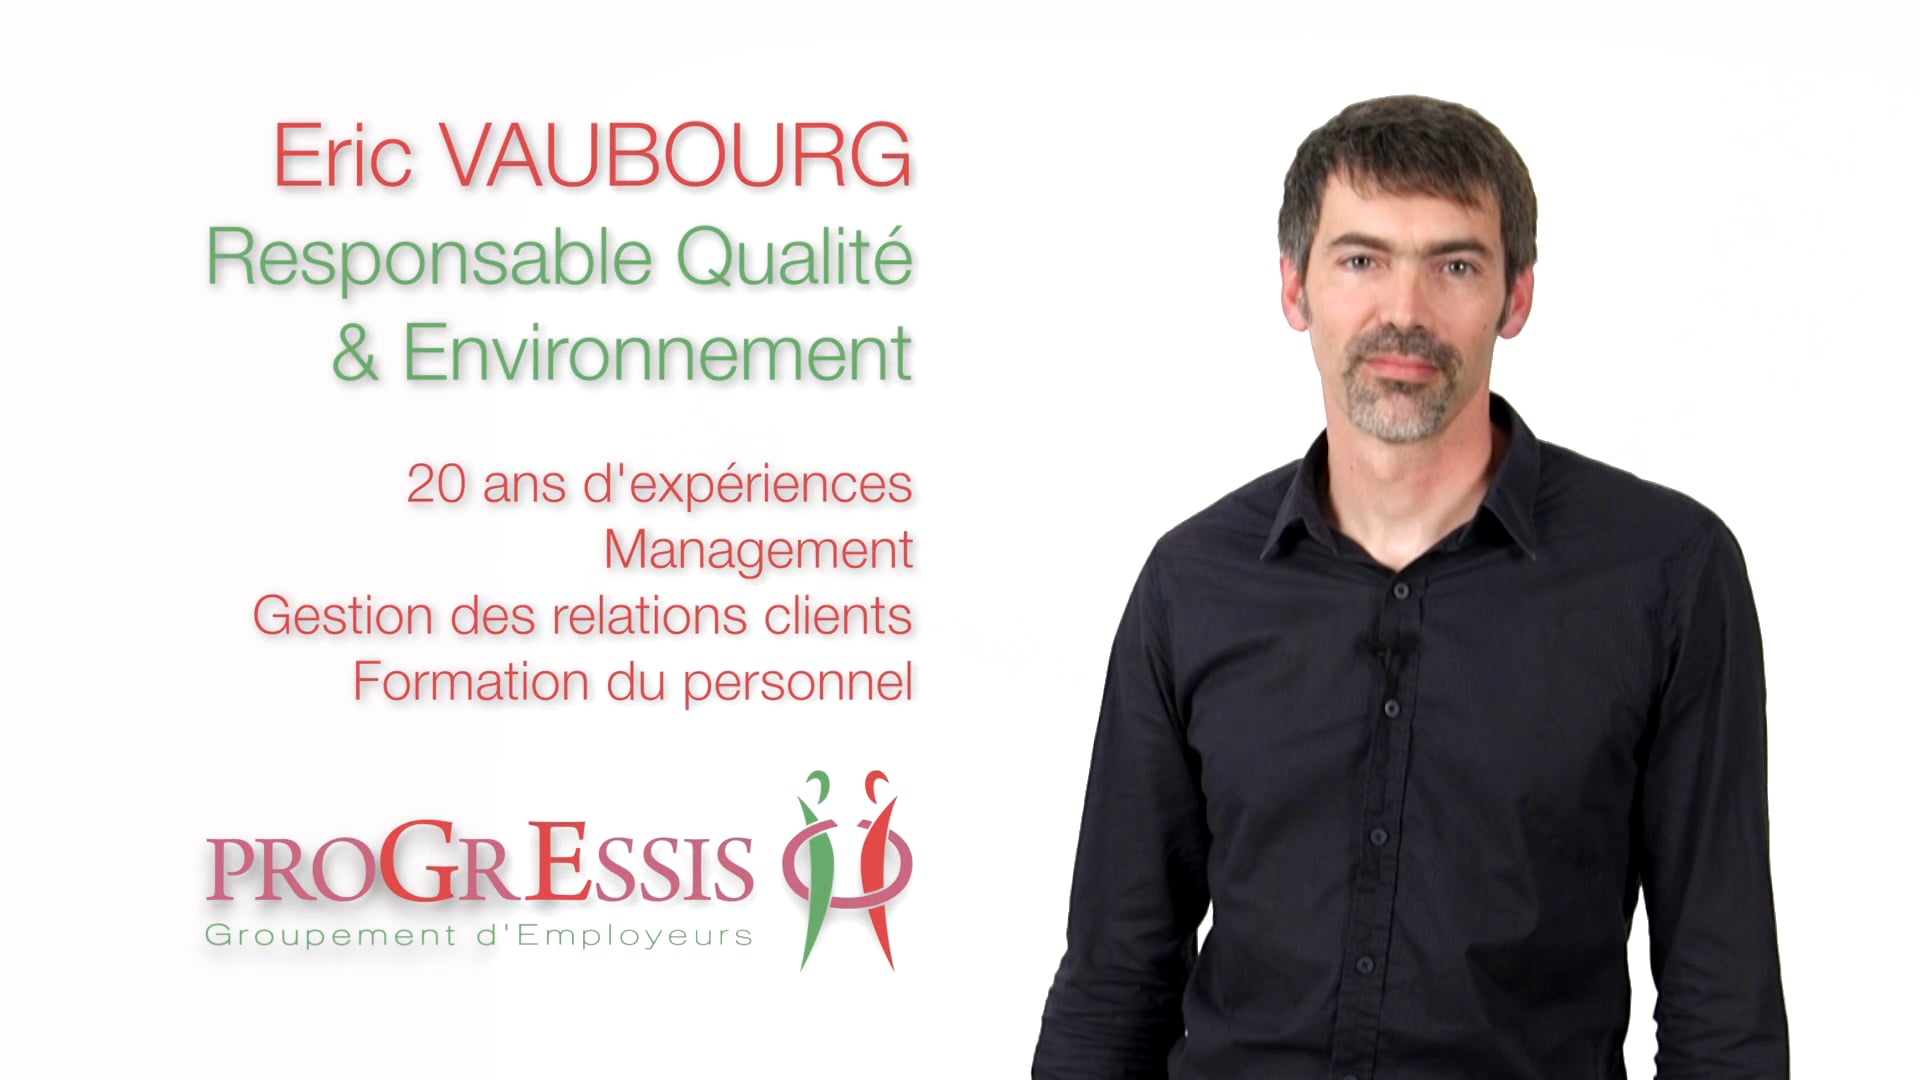 Progressis - CV Eric Vaubourg